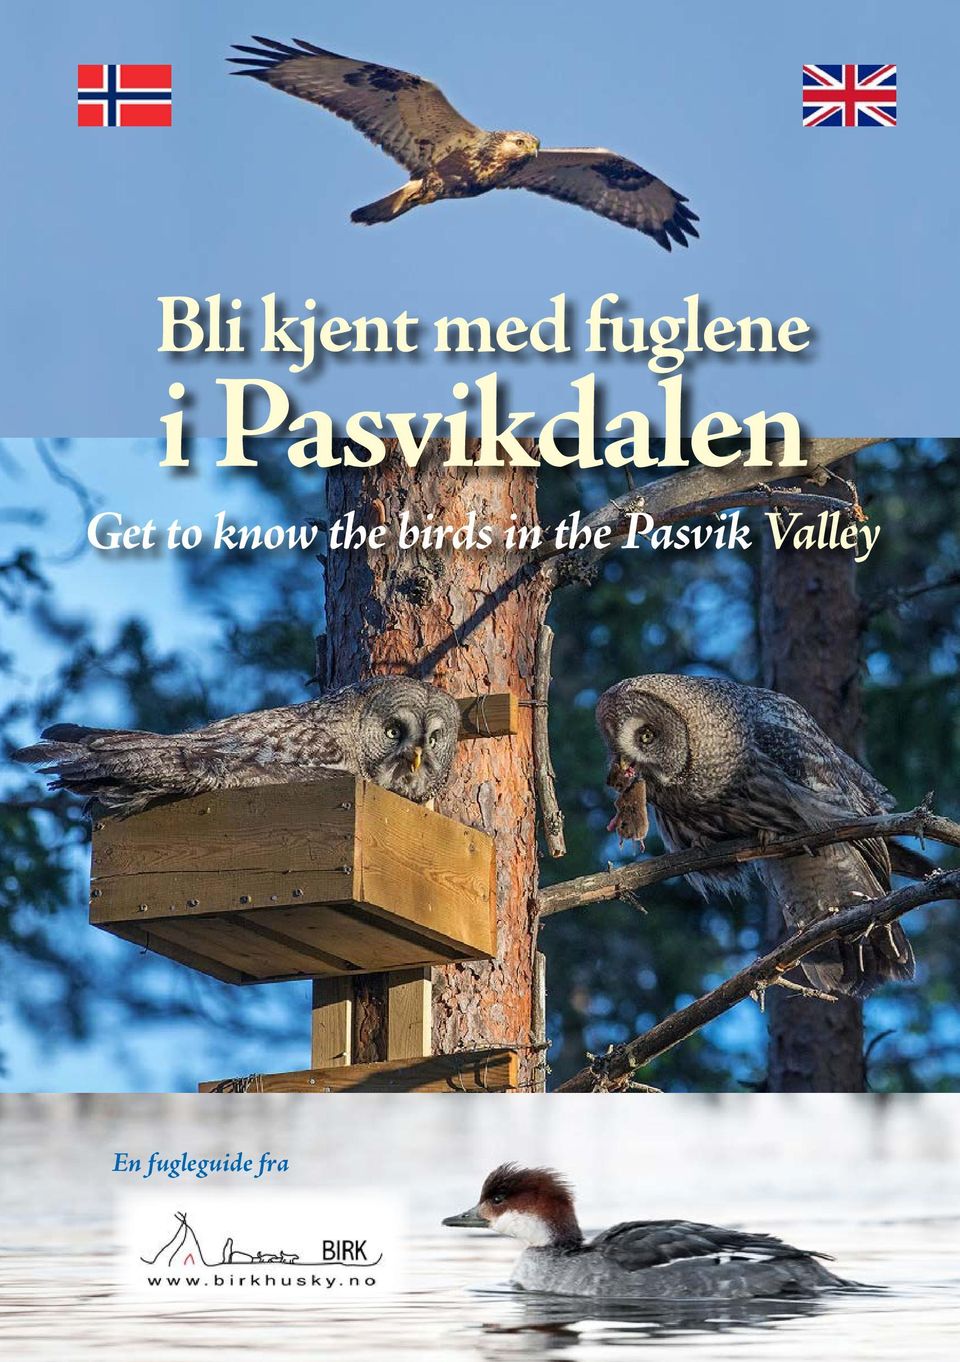 the birds in the Pasvik